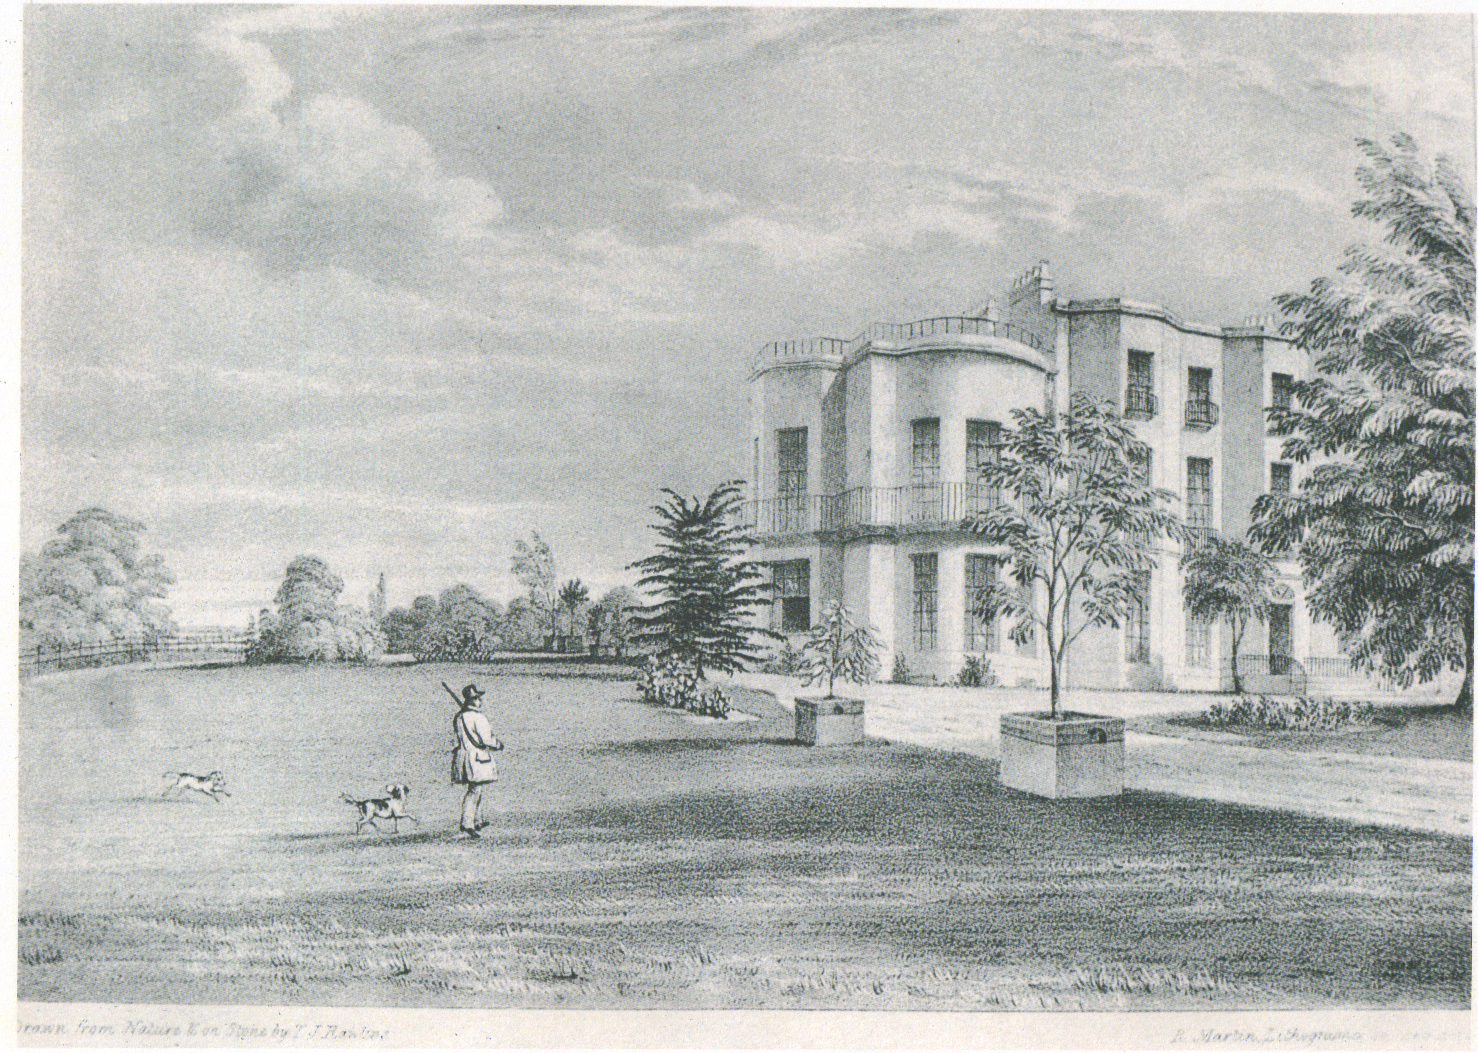 Print of the old Shrewsbury House